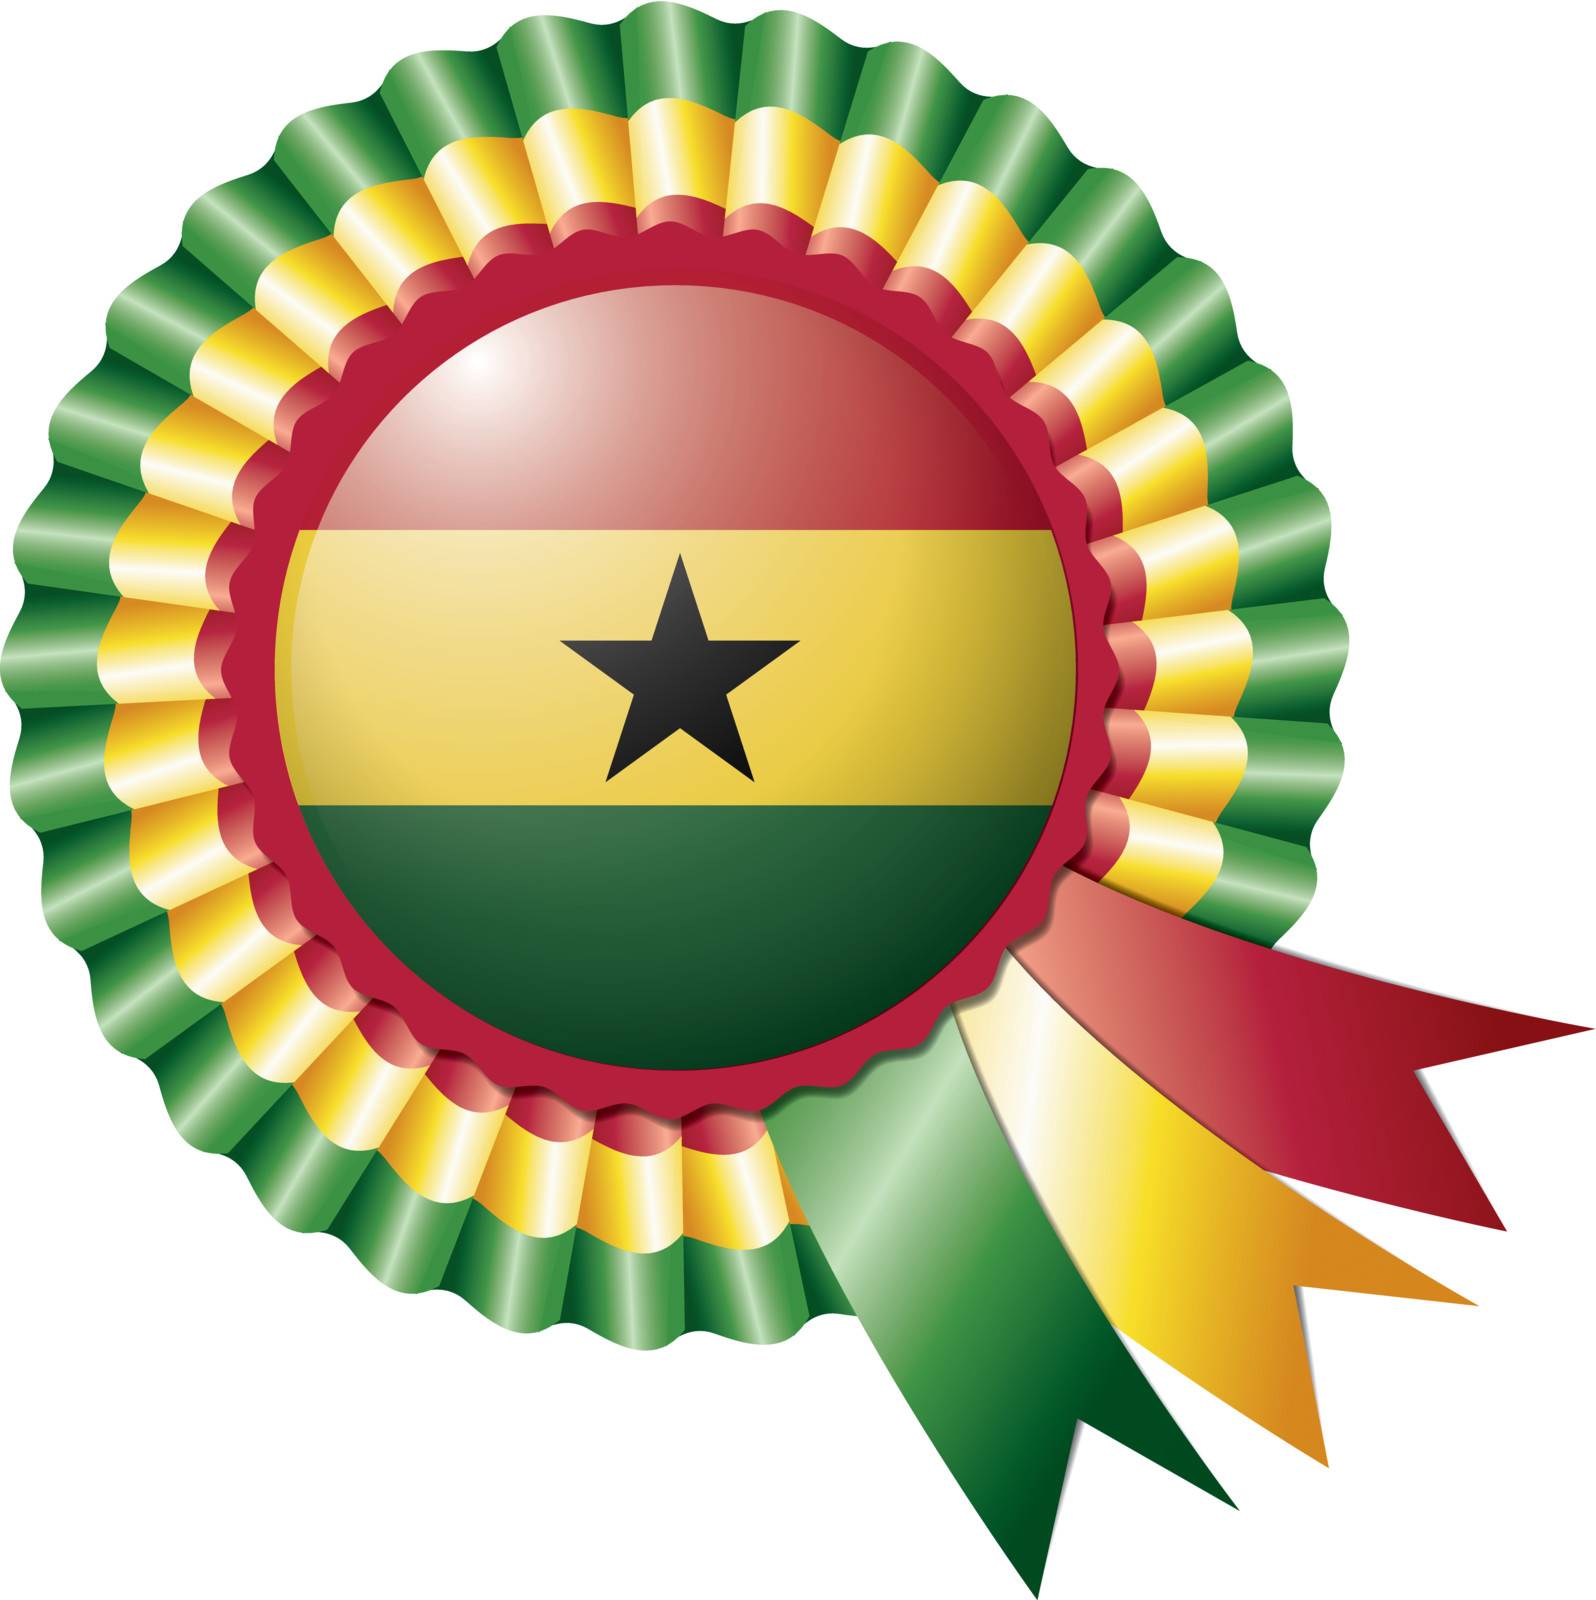 Ghana rosette flag by milinz